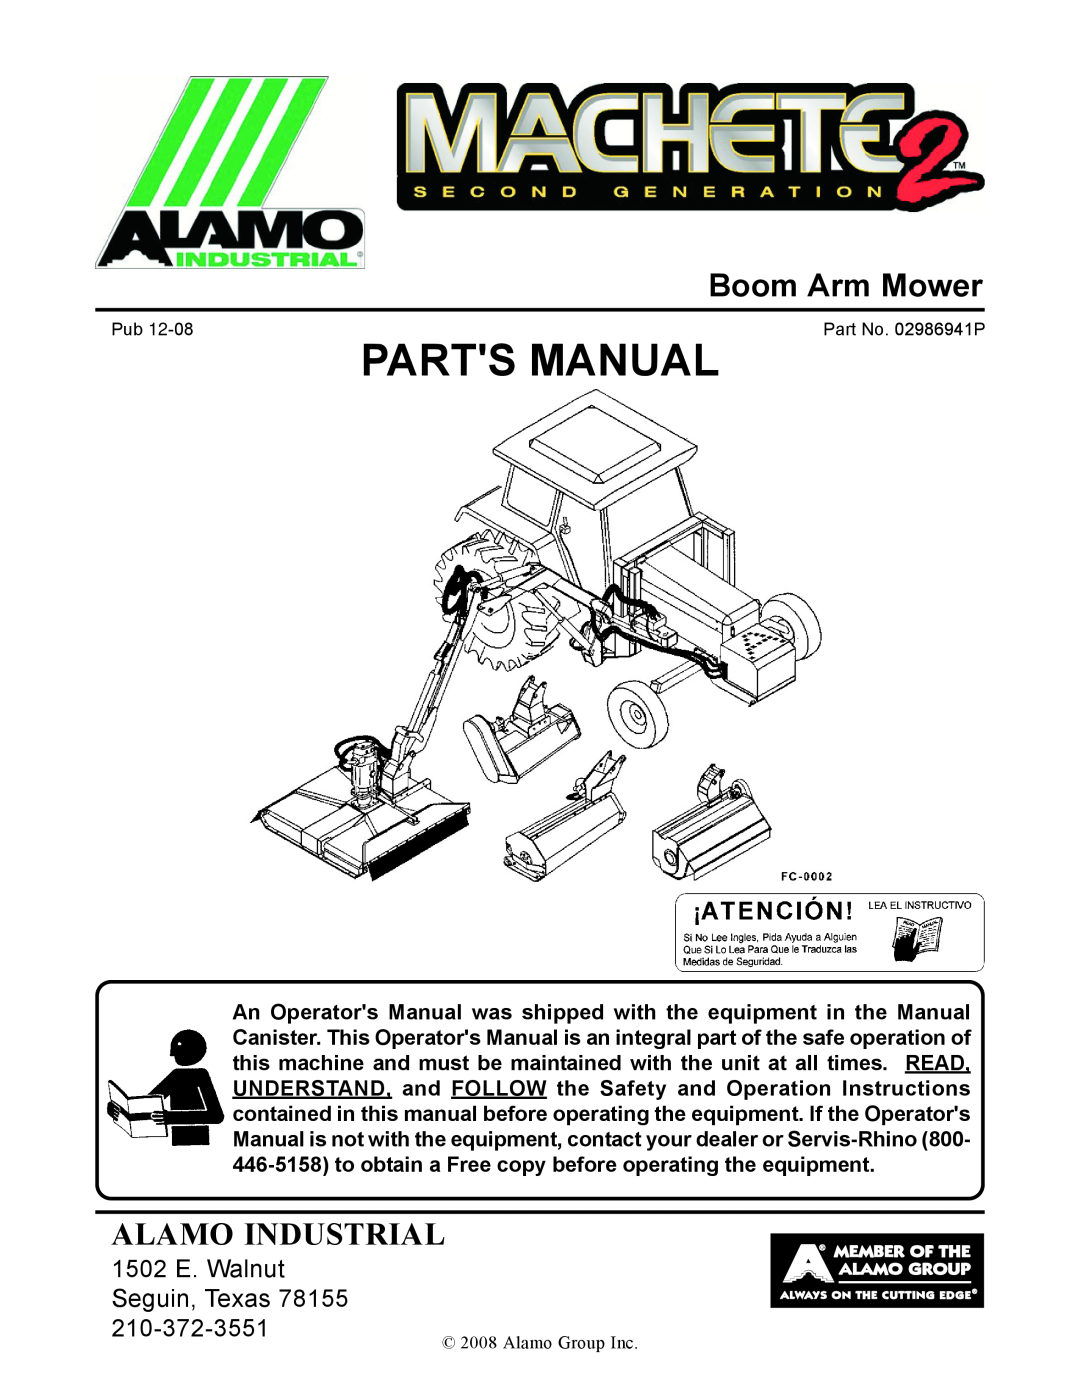 Alamo 02986941P manual Boom Arm Mower, Alamo Industrial, 1502 E. Walnut Seguin, Texas 78155, Parts Manual 